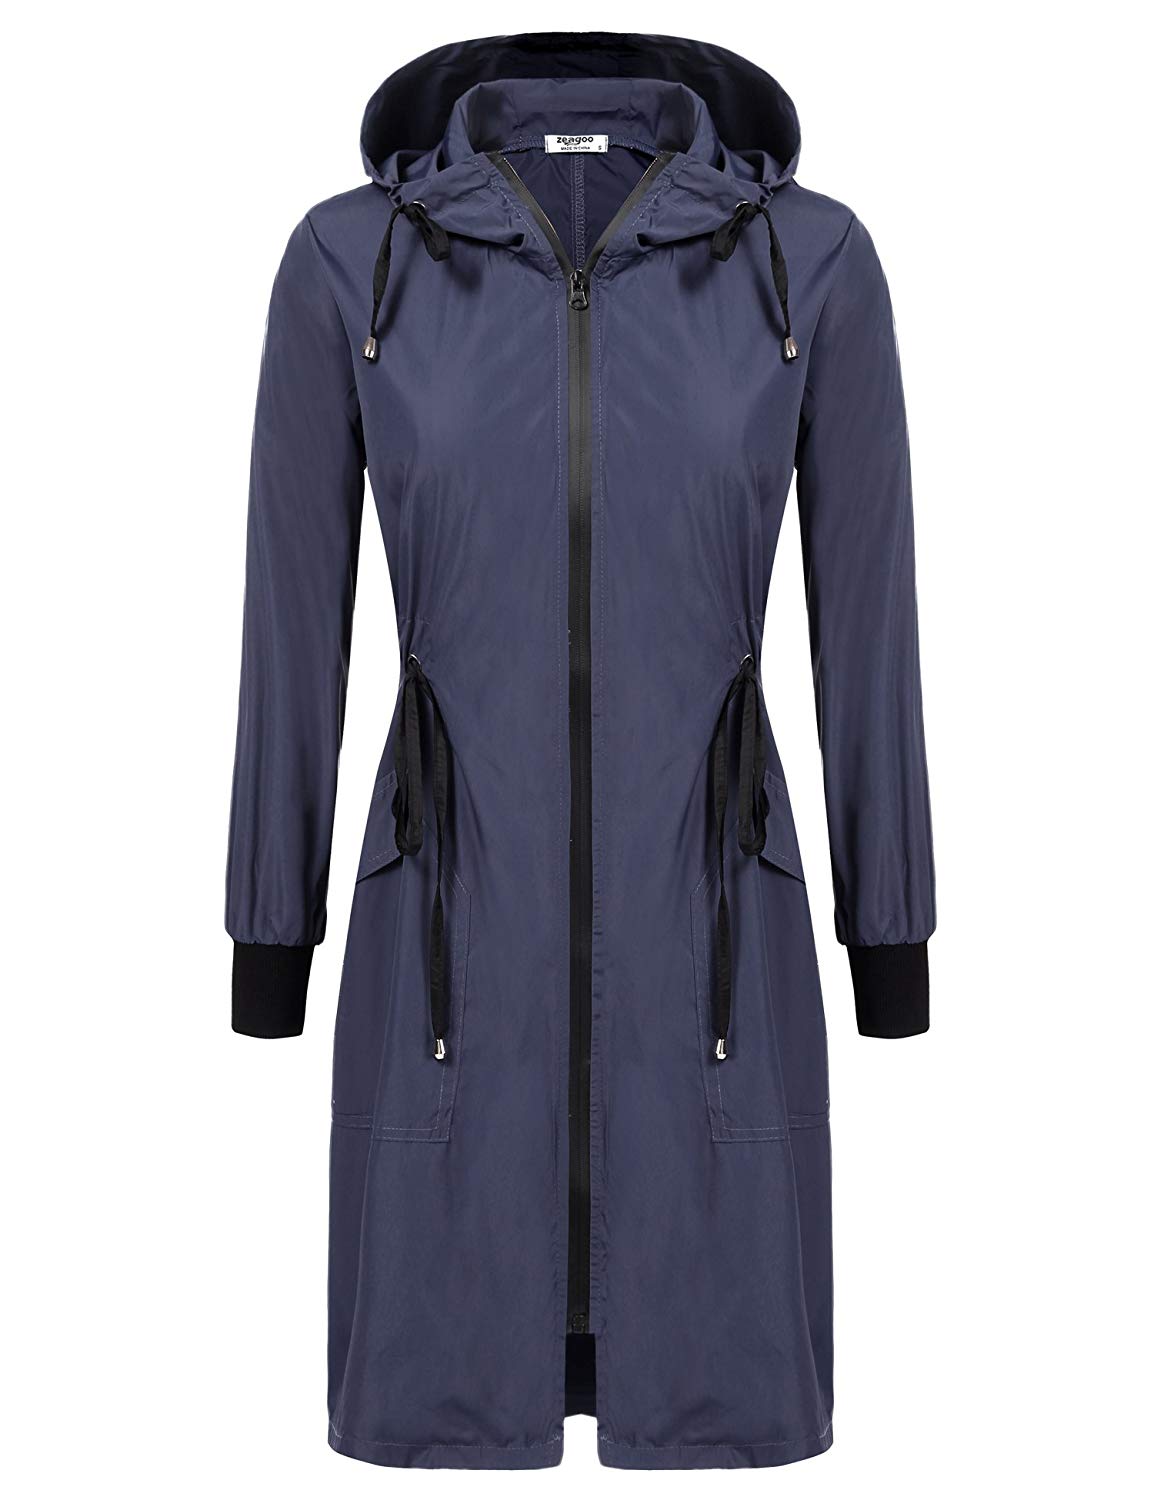 women's long lightweight raincoat